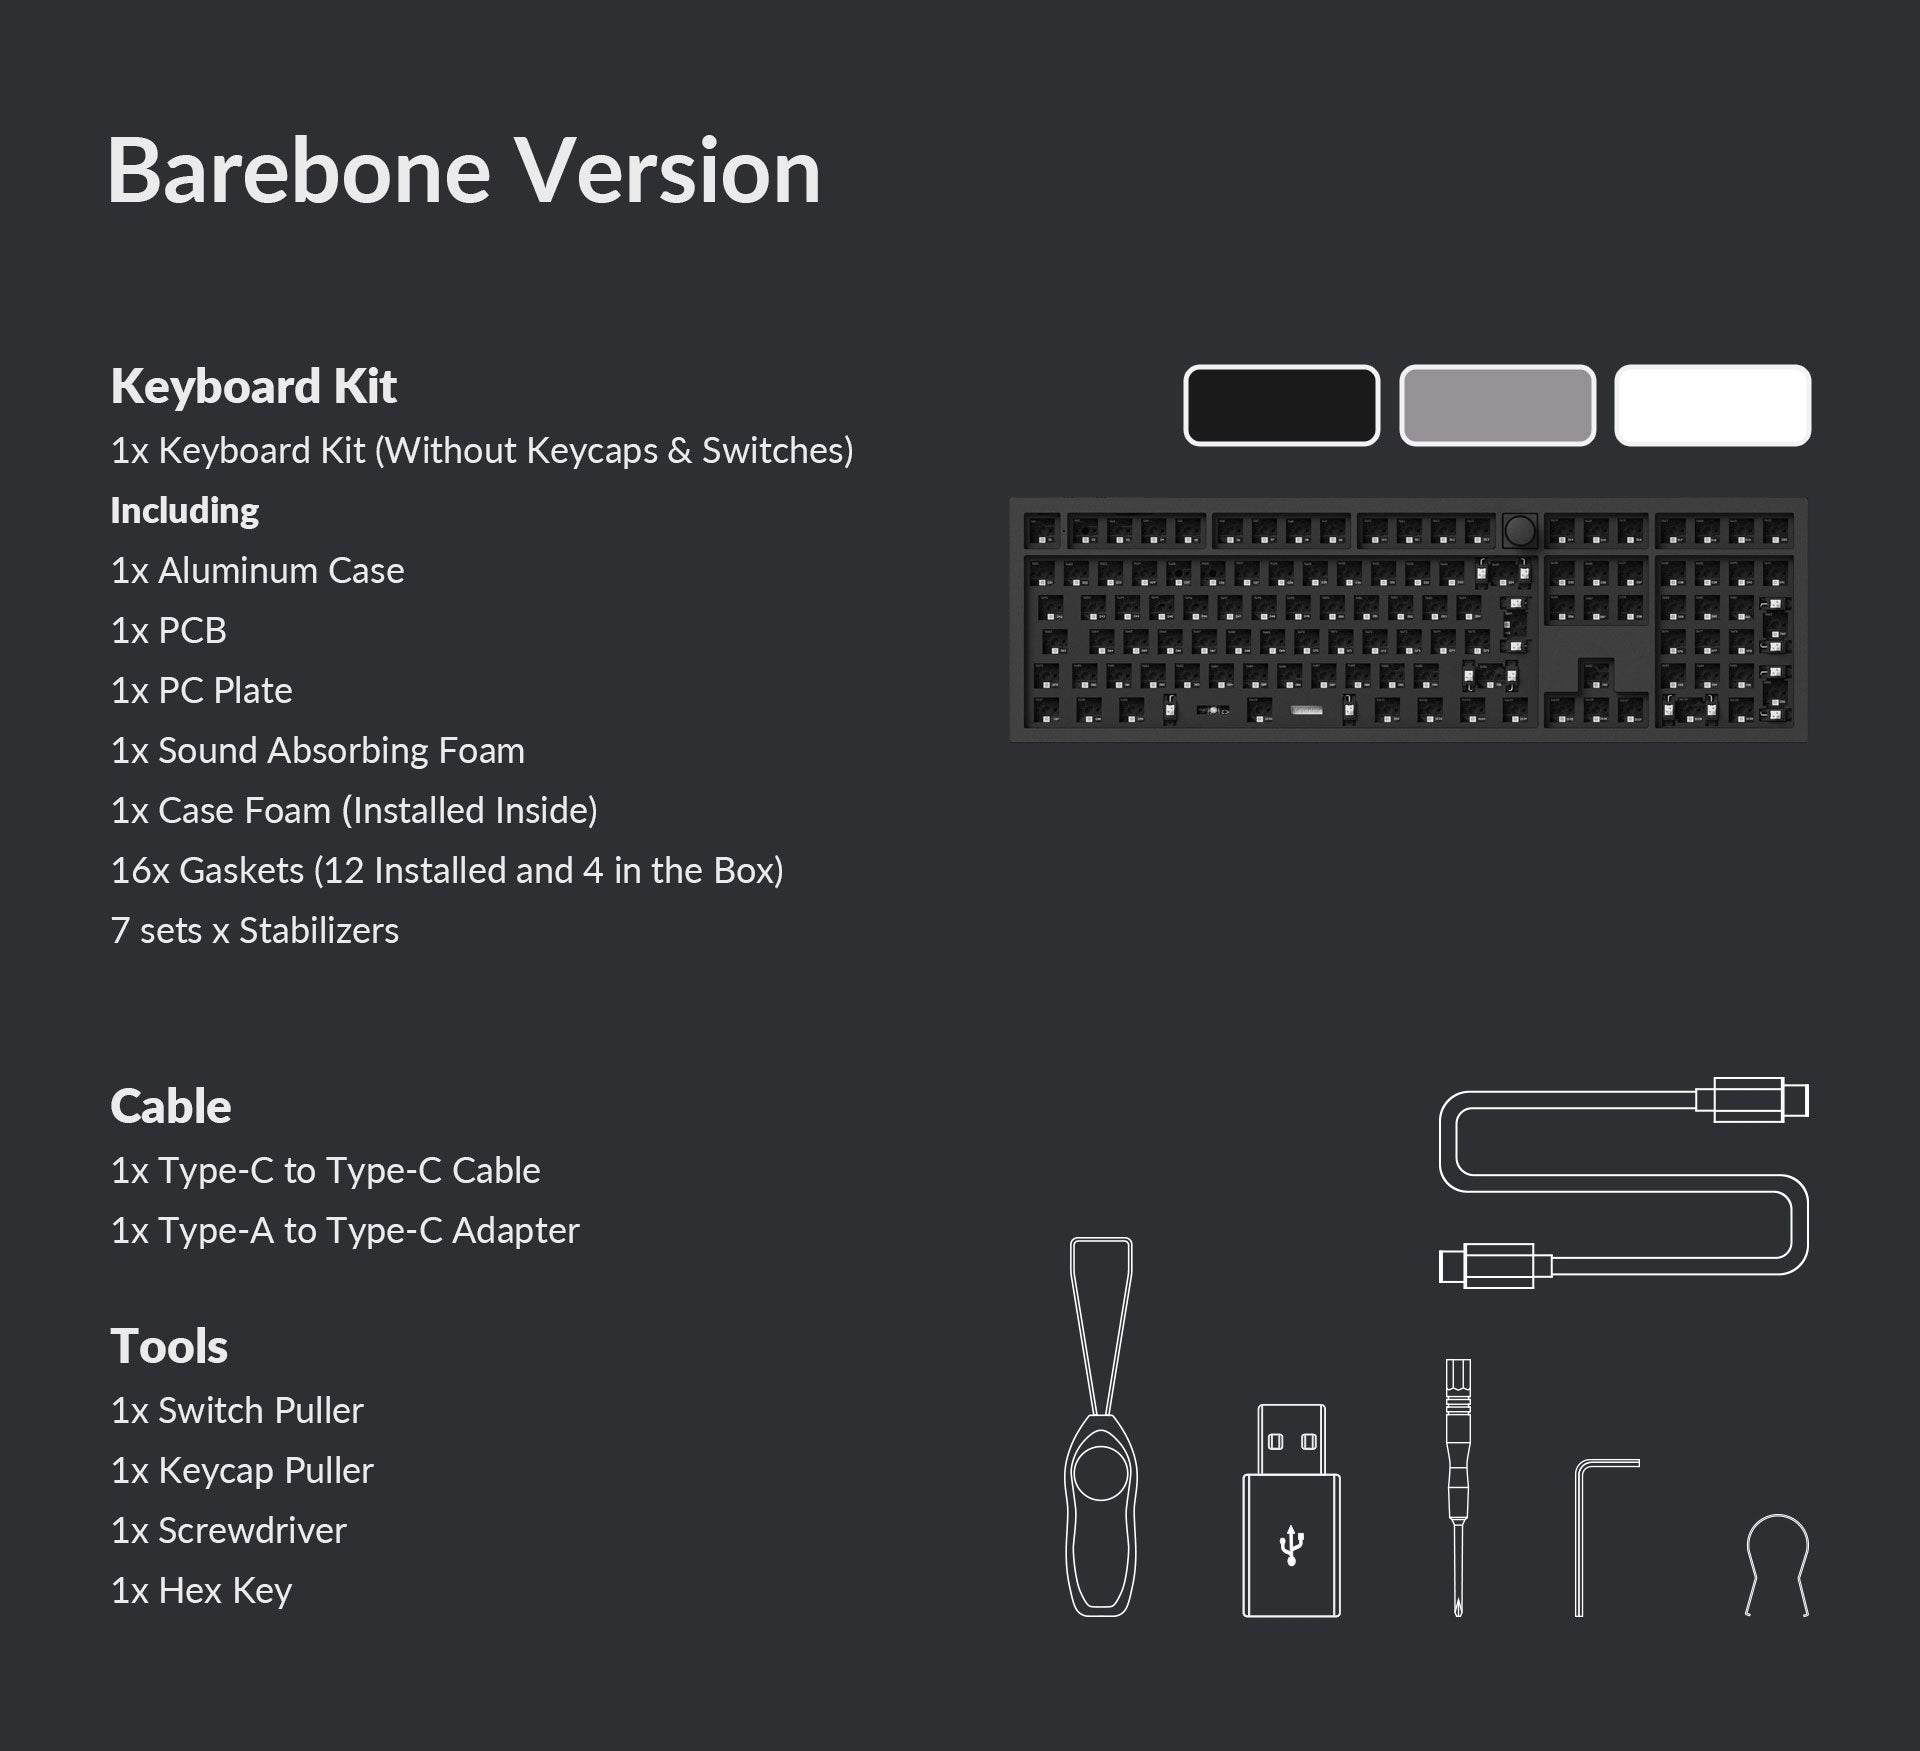 Packing list for Q6 Pro ISO barebone knob version